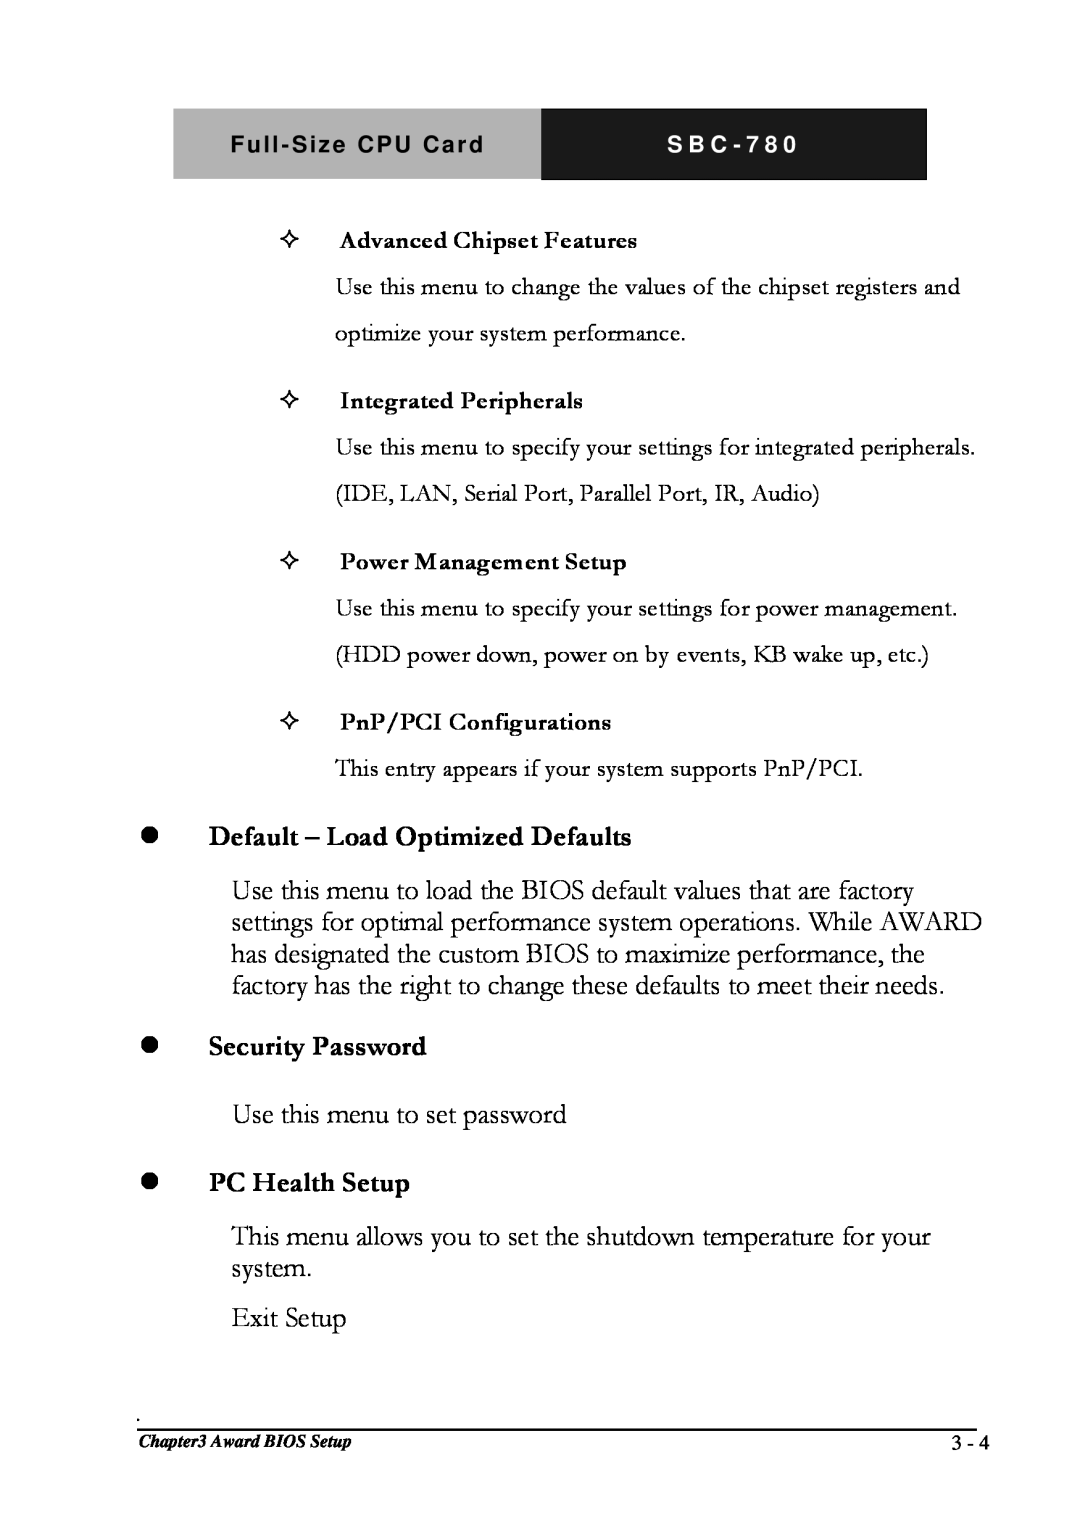 Intel SBC-780 manual Default – Load Optimized Defaults, Security Password, PC Health Setup 